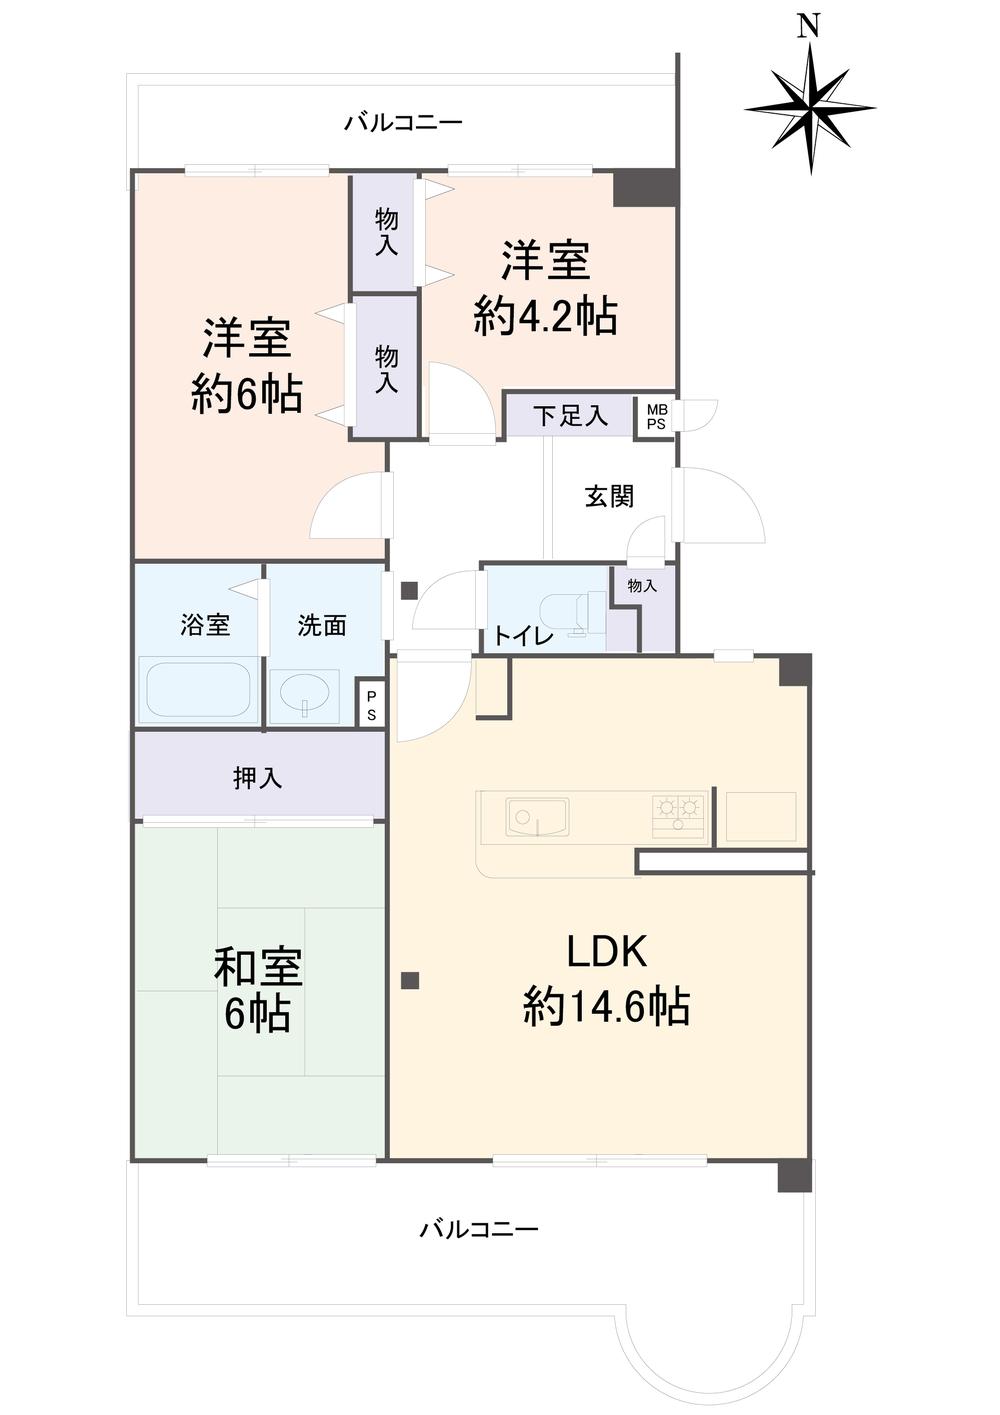 Floor plan. 3LDK, Price 14.9 million yen, Occupied area 67.09 sq m , Balcony area 17.67 sq m